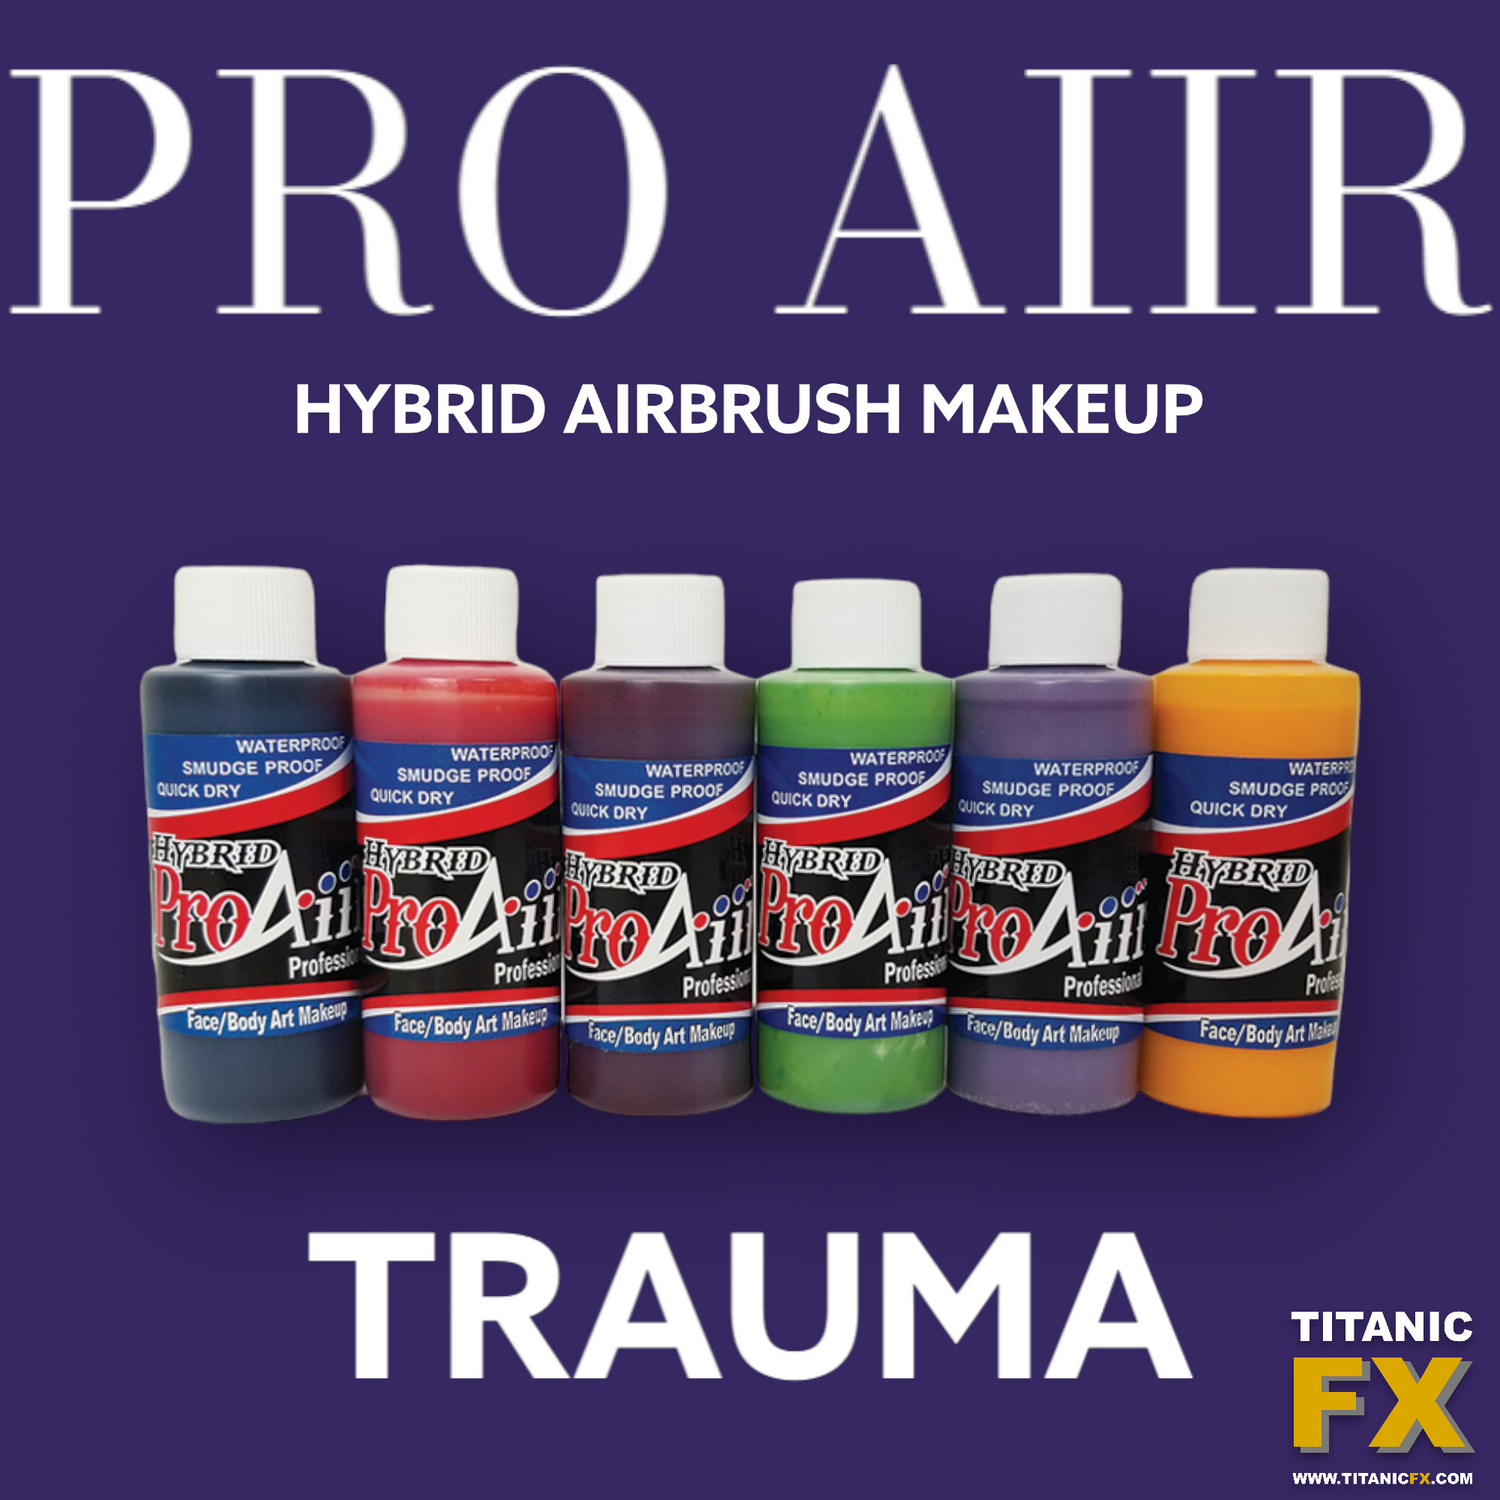 Pro Aiir Hybrid Airbrush Makeup Kit - 'Trauma'